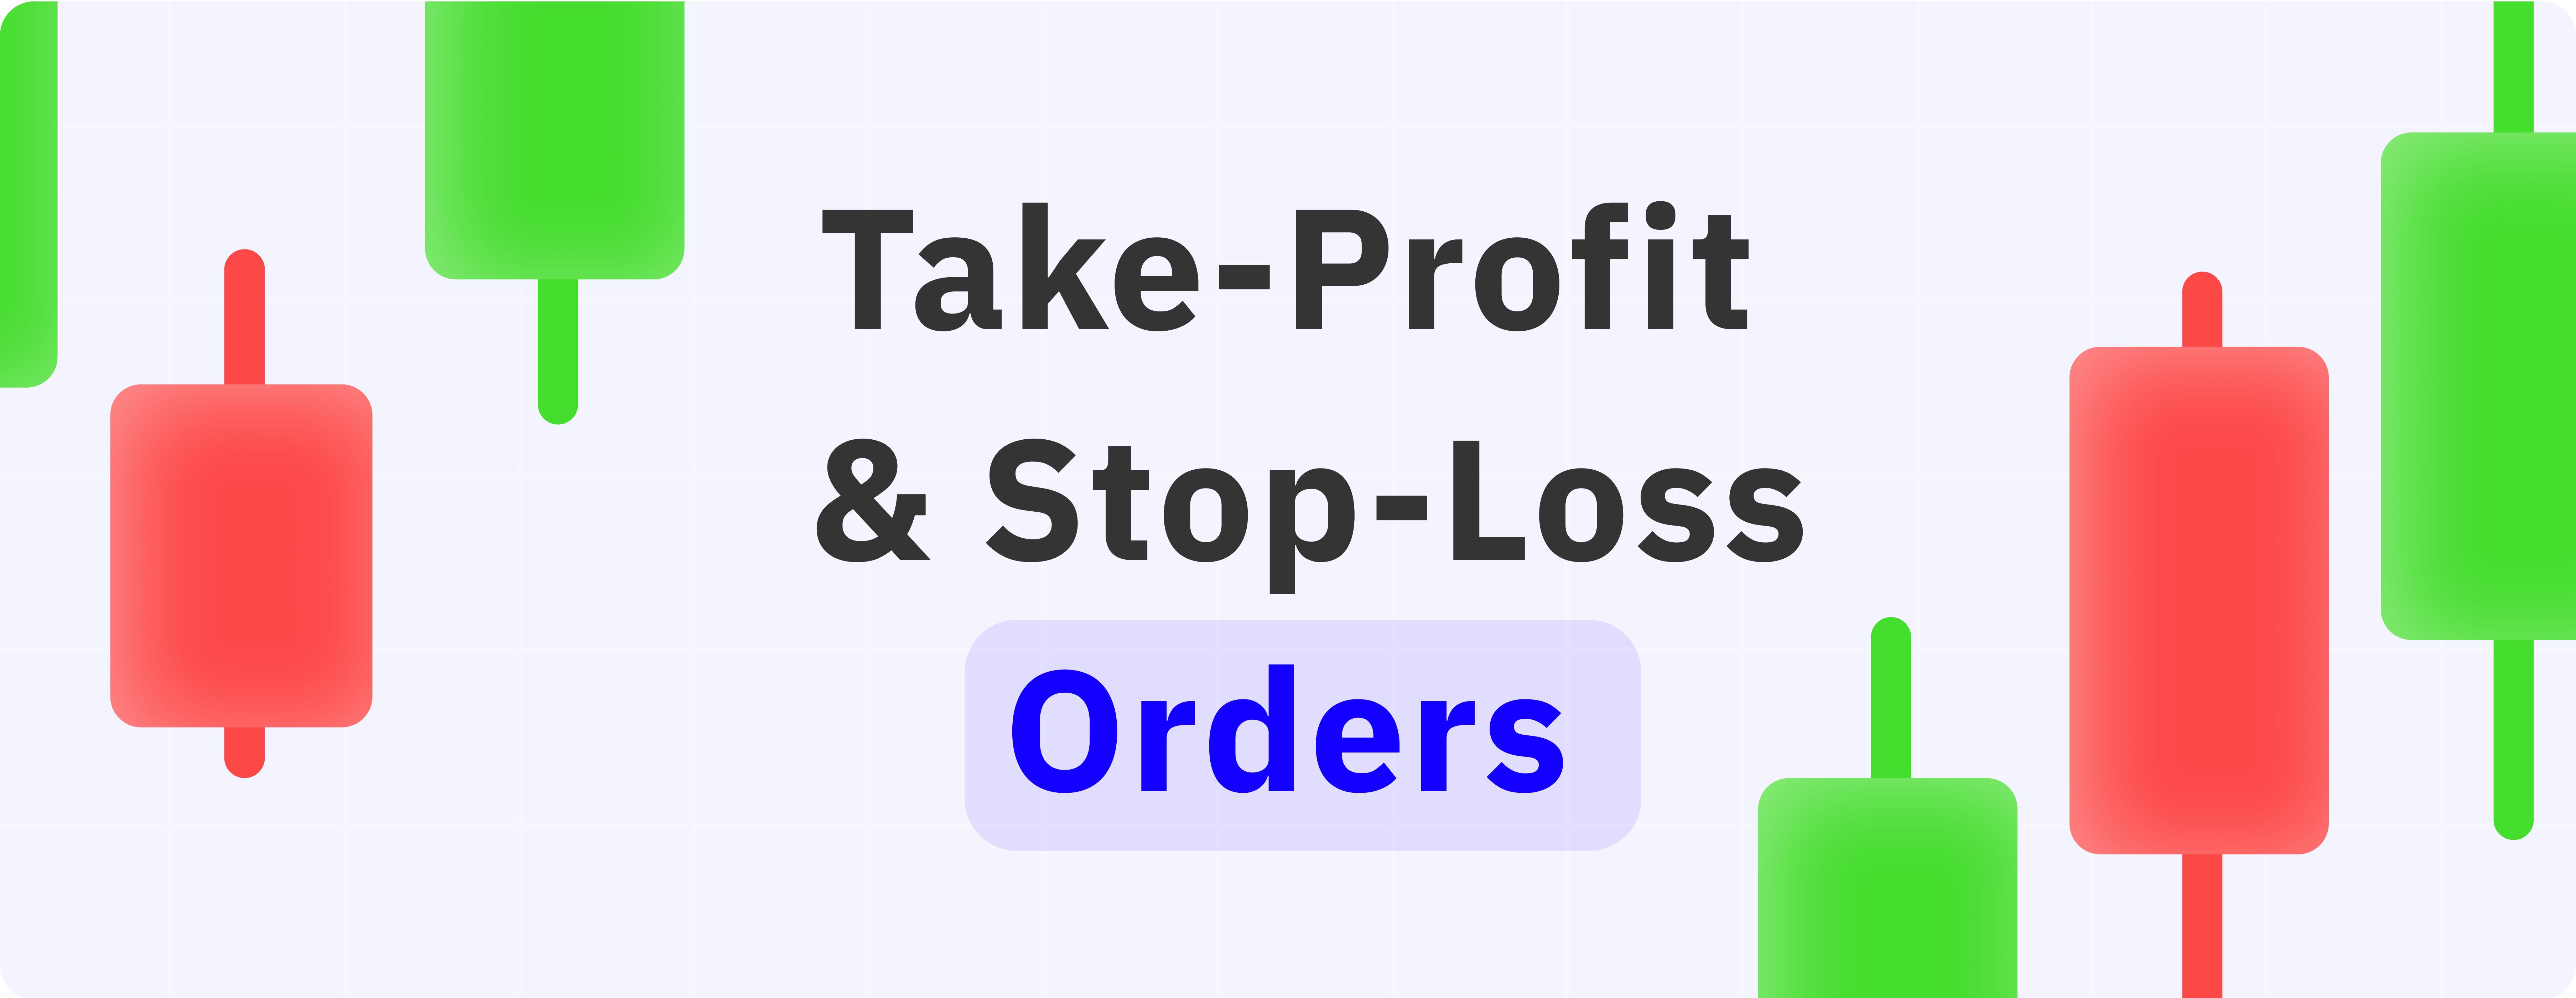 Take-Profit & Stop-Loss Orders